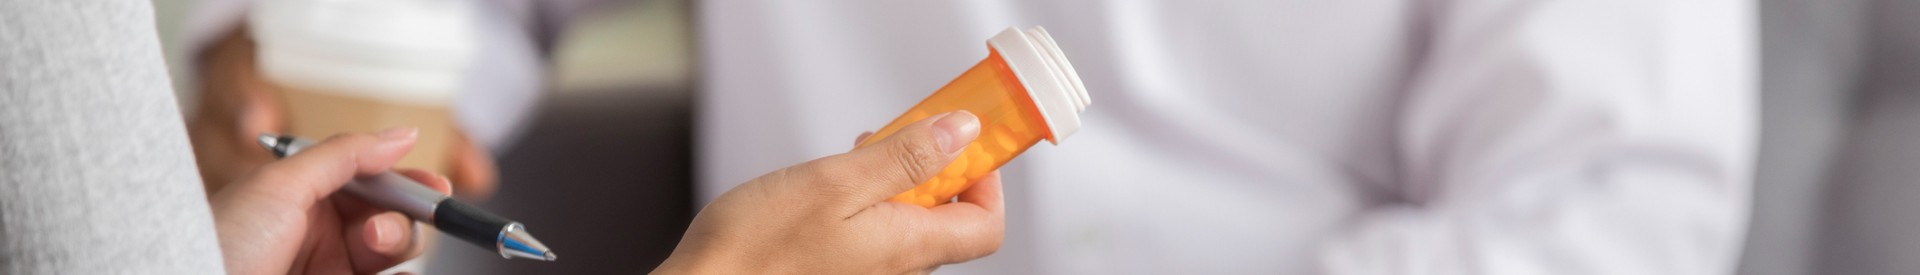 Prescriber Examining Drug Bottle